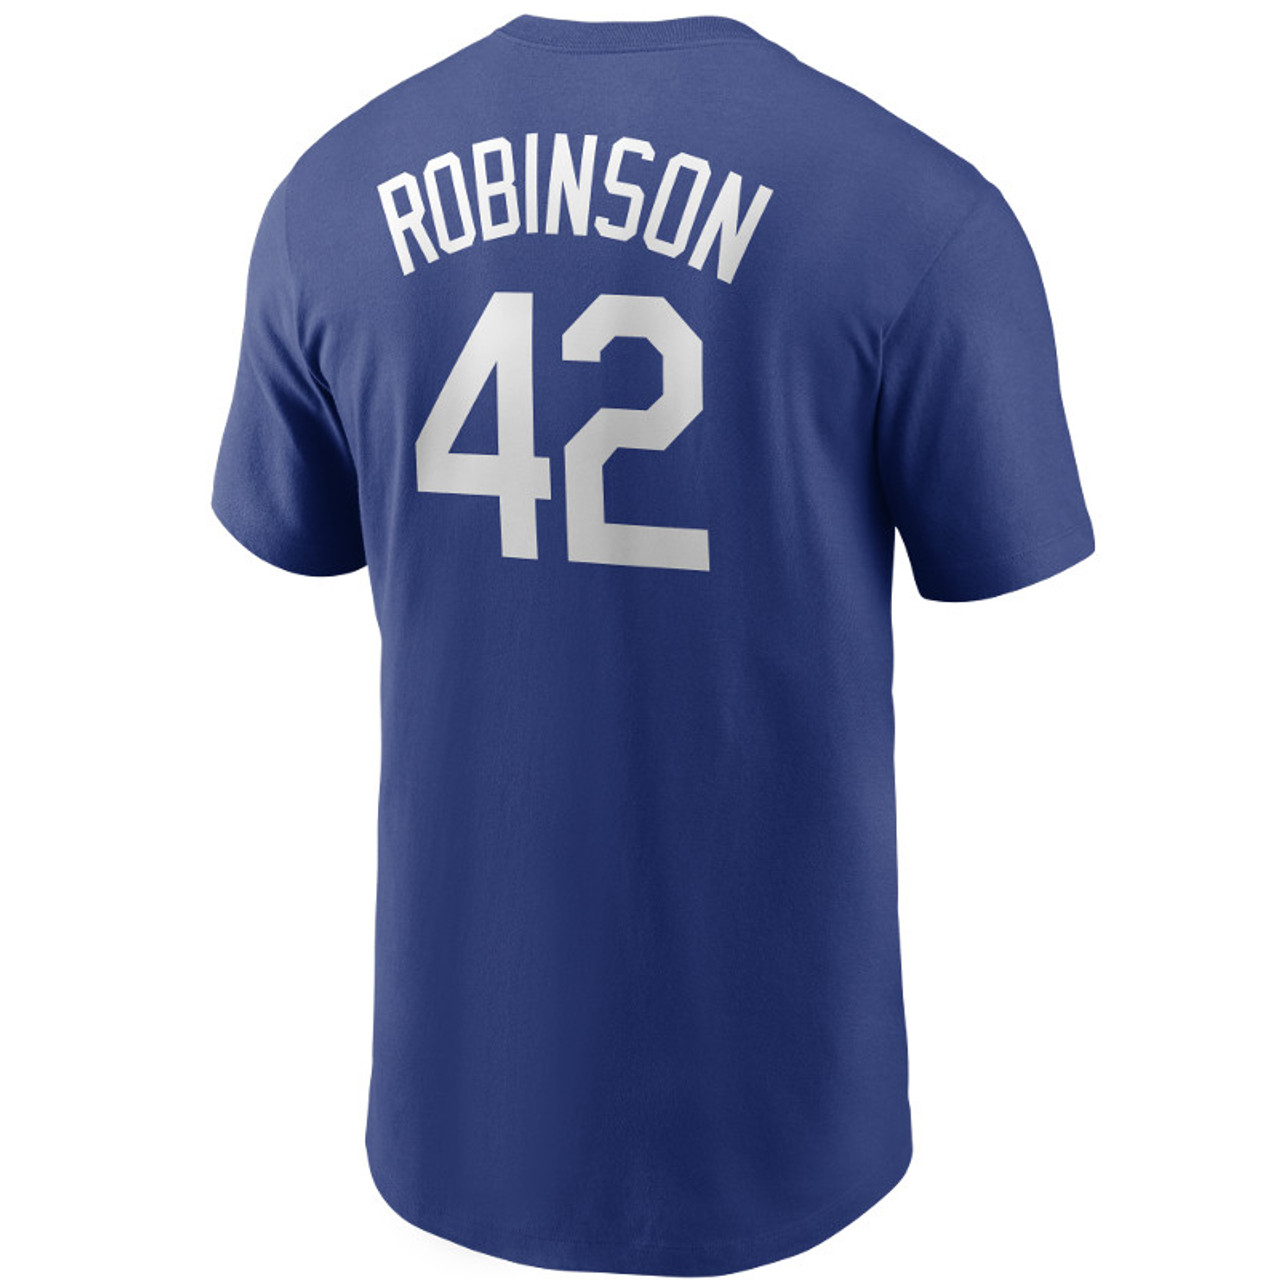 jackie robinson uniform number